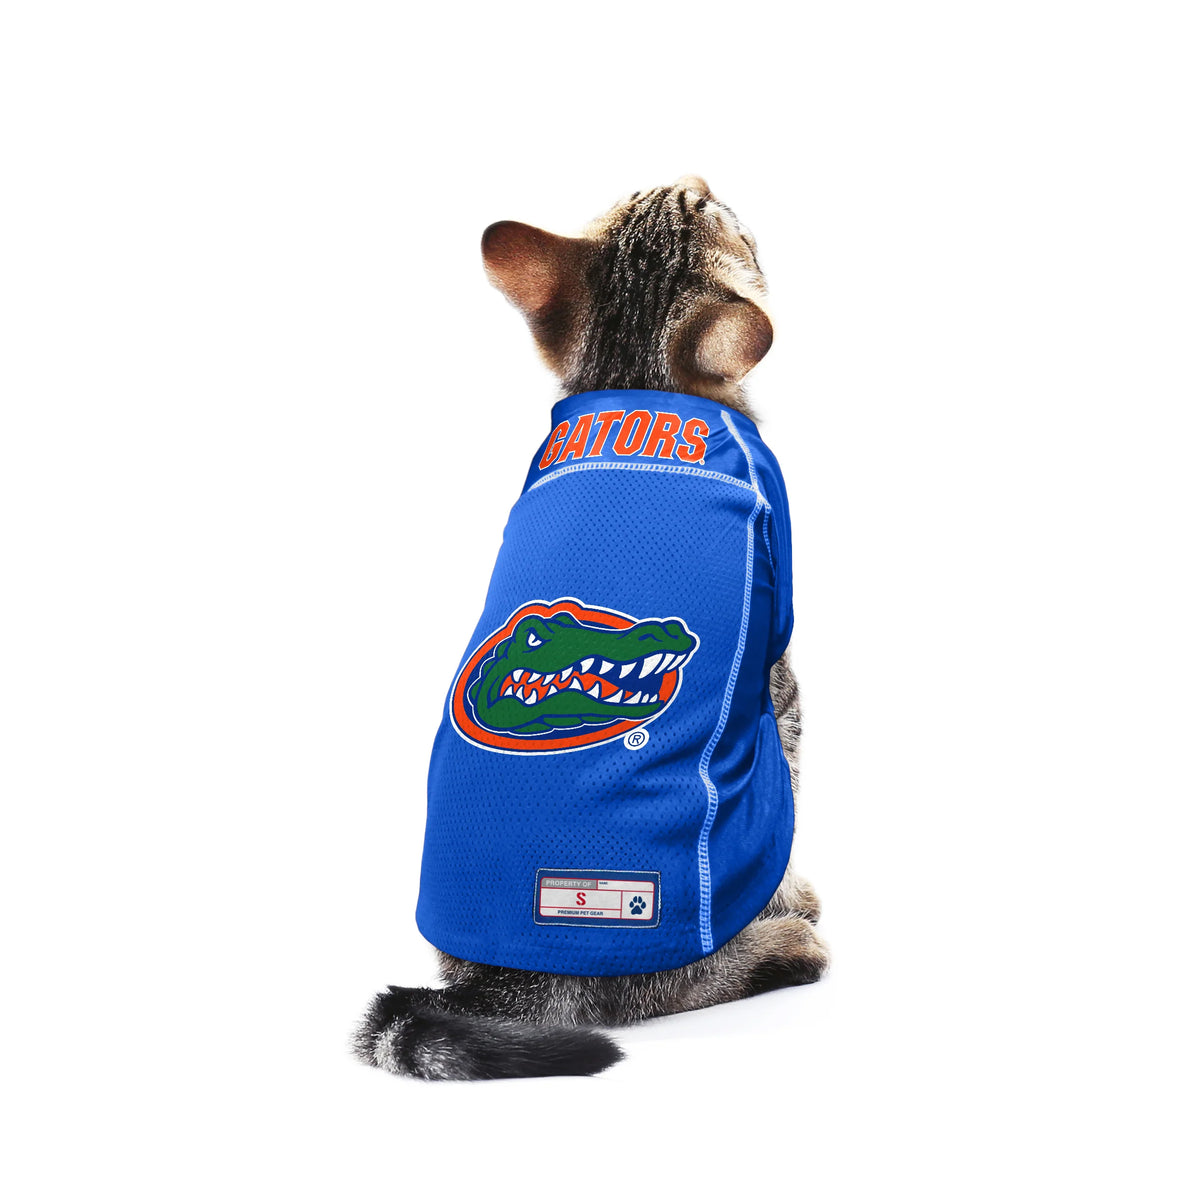 FL Gators Cat Jersey